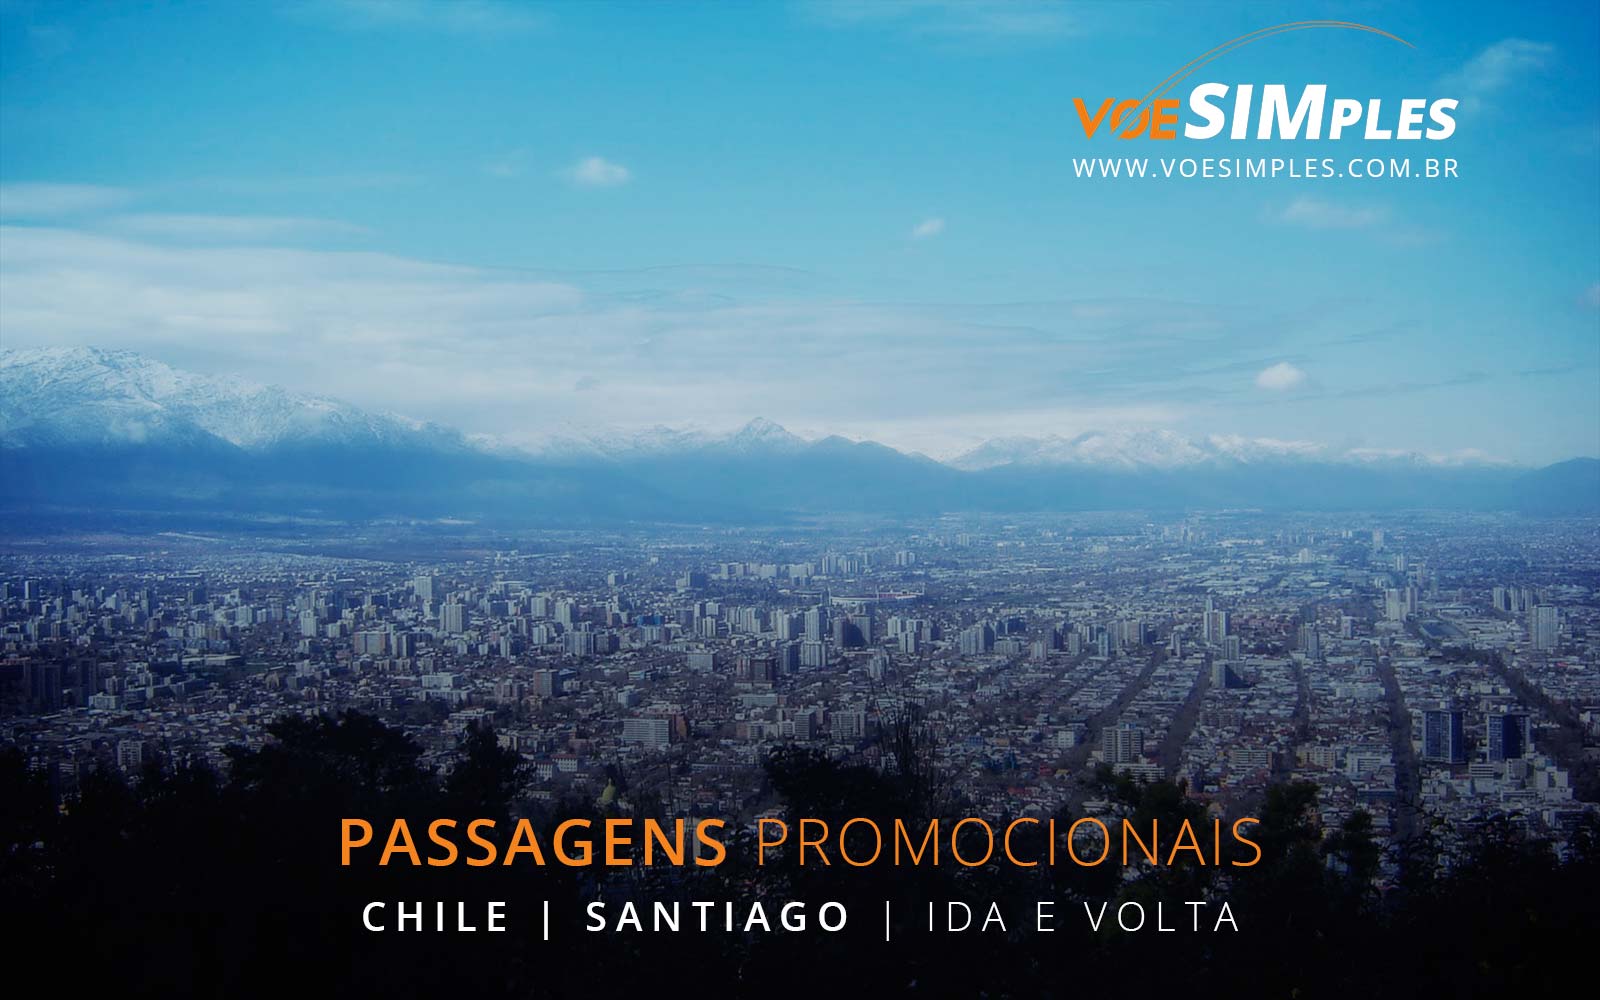 Passagens aéreas baratas para Santiago no Chile